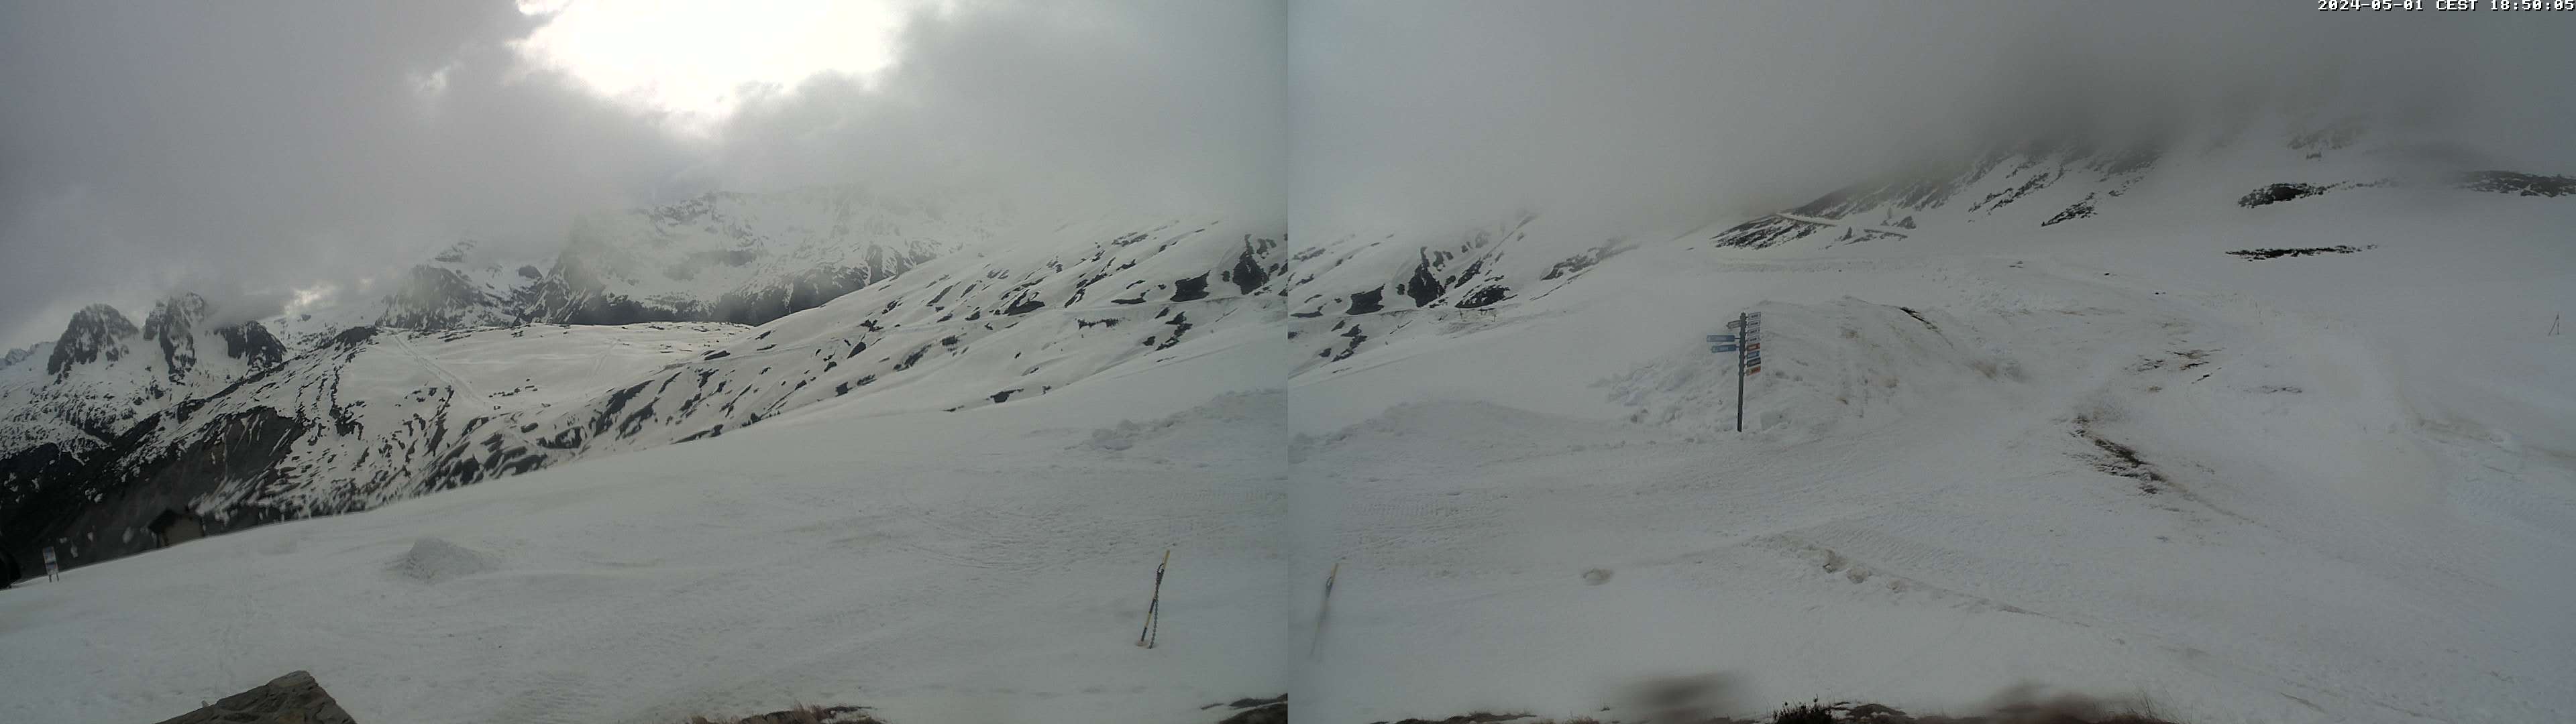 Le Tour Balme ski resort webcam: Chamarillon 1850m